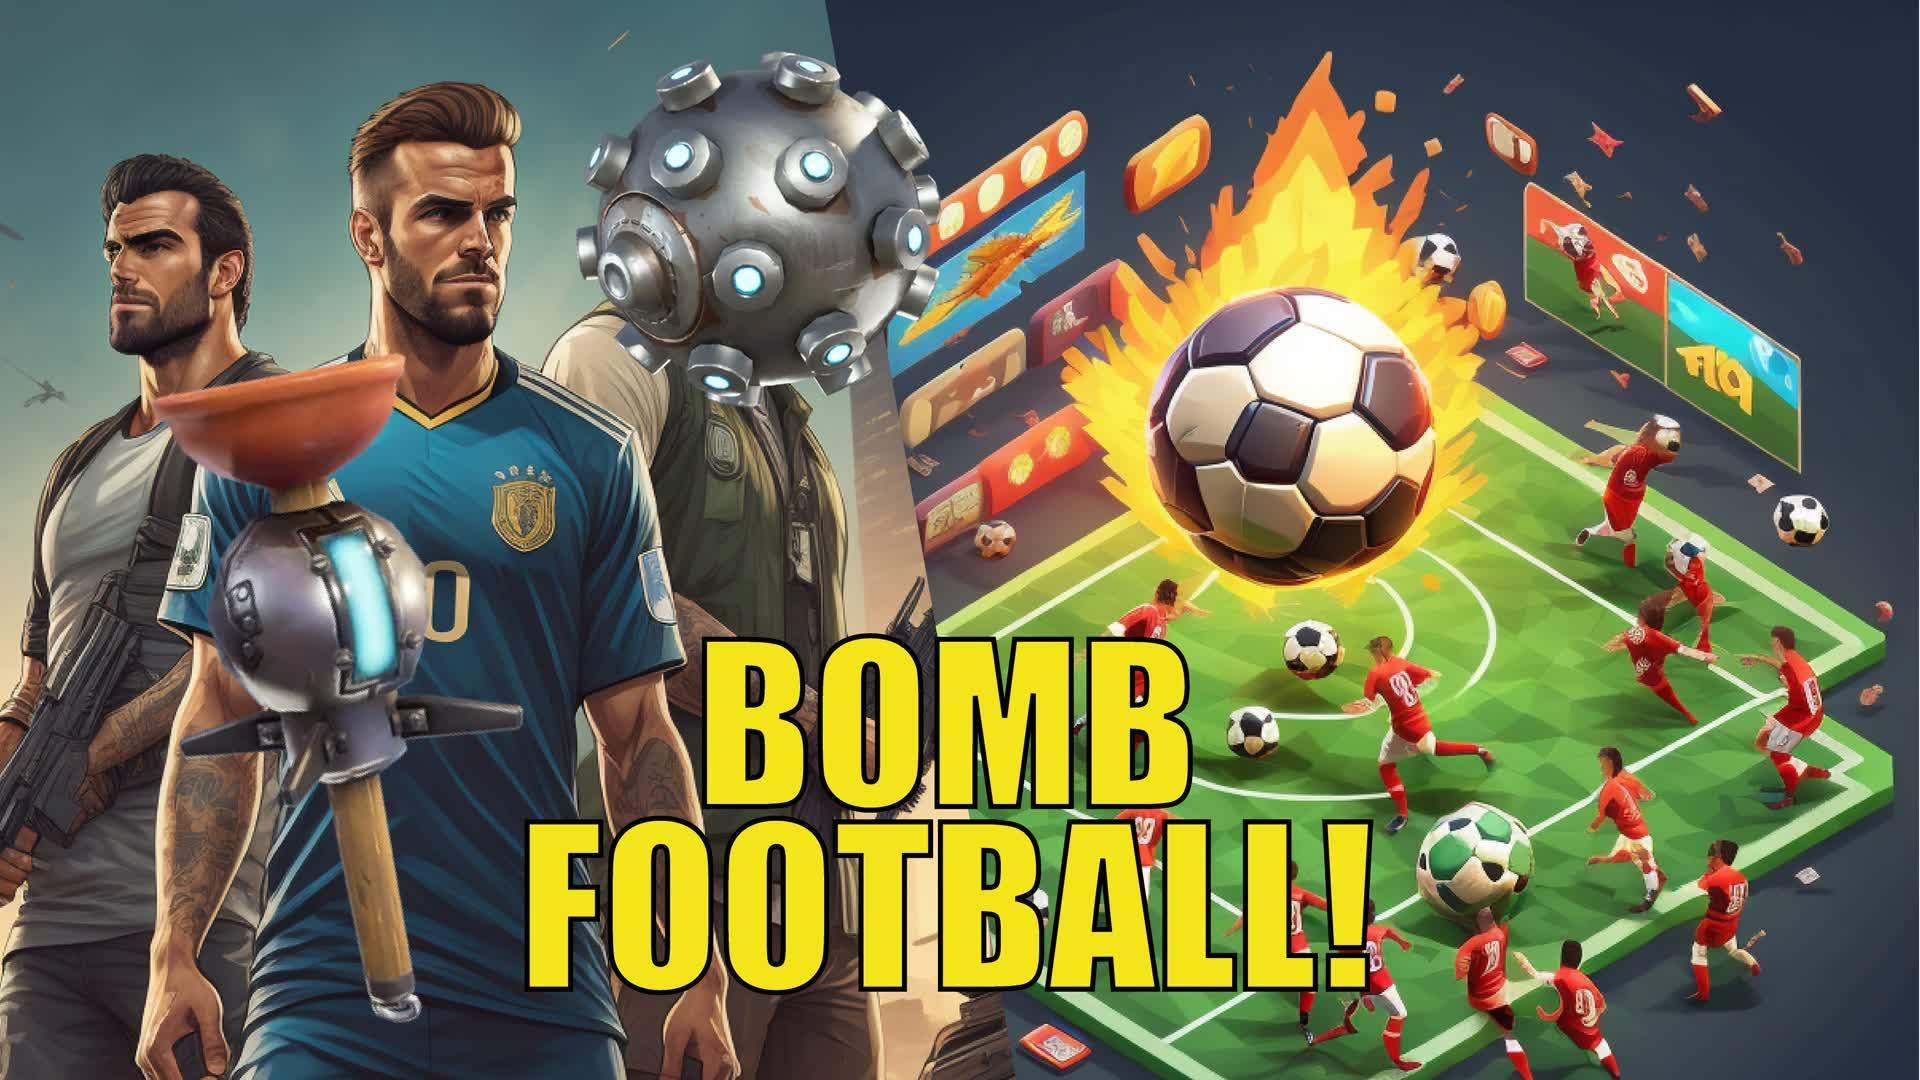 Bomb Football!